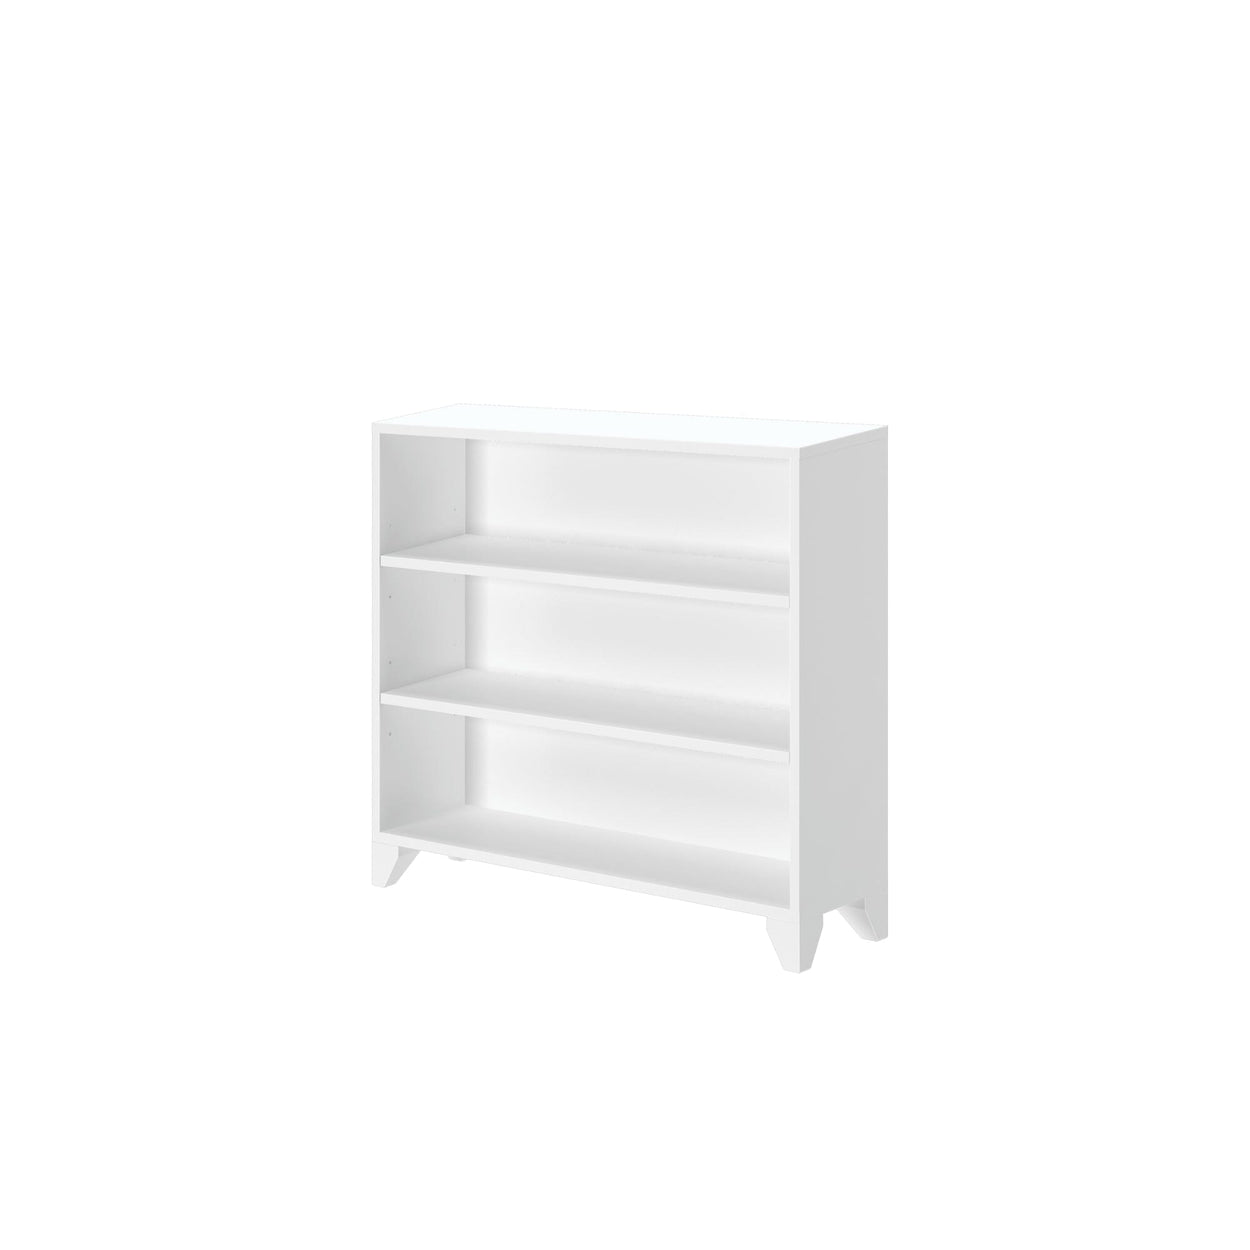 184720-002 : Furniture Classic 3-Shelf Bookcase, White